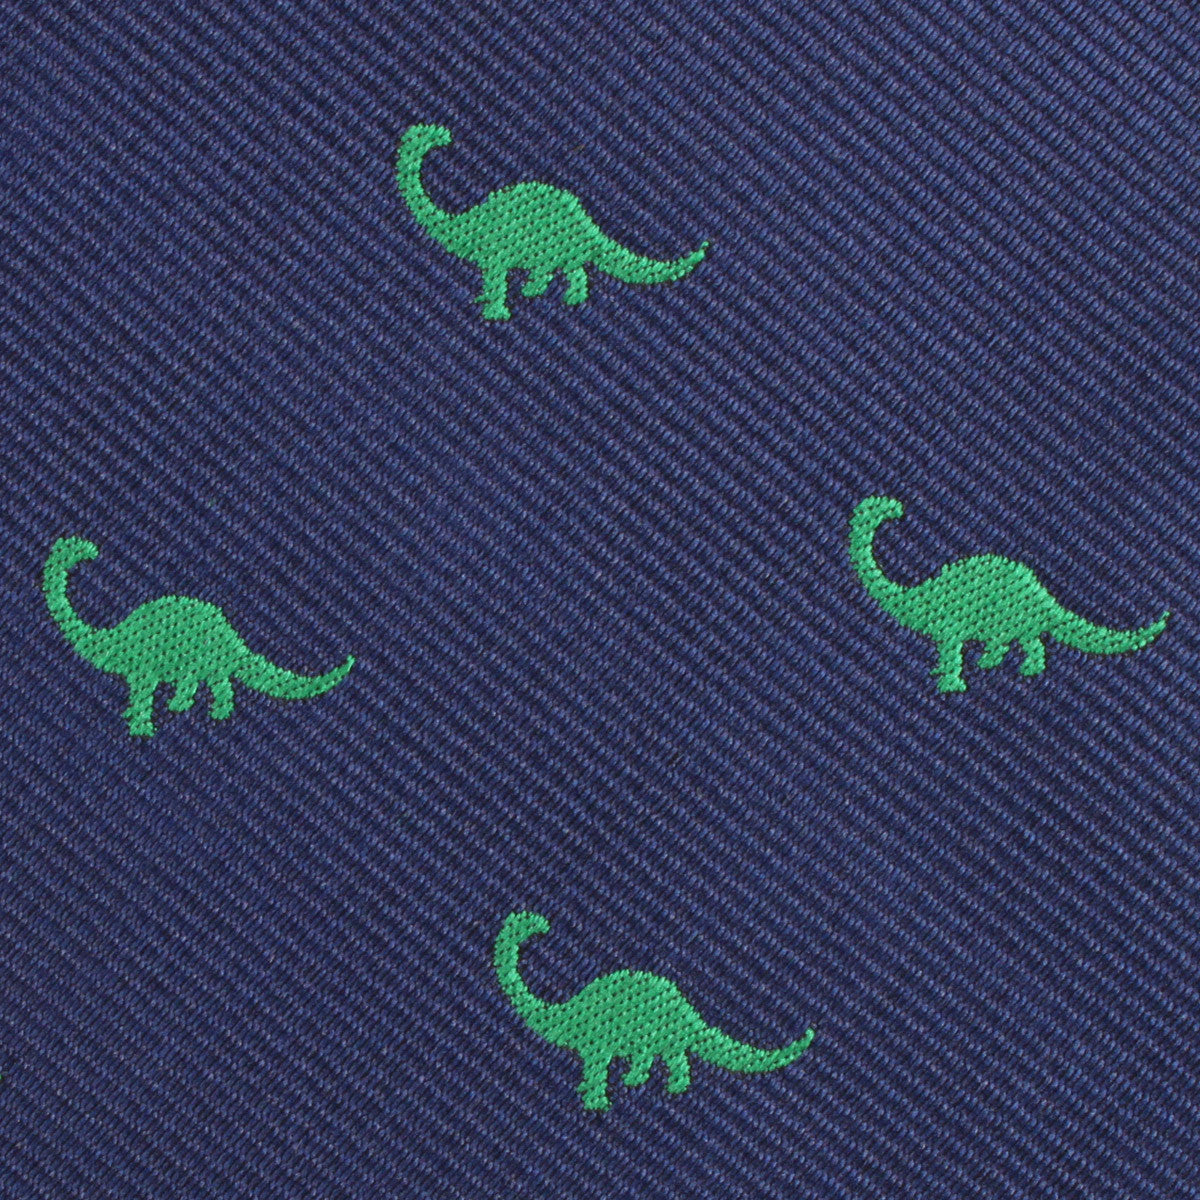 Brontosaurus Dinosaur Fabric Pocket Square